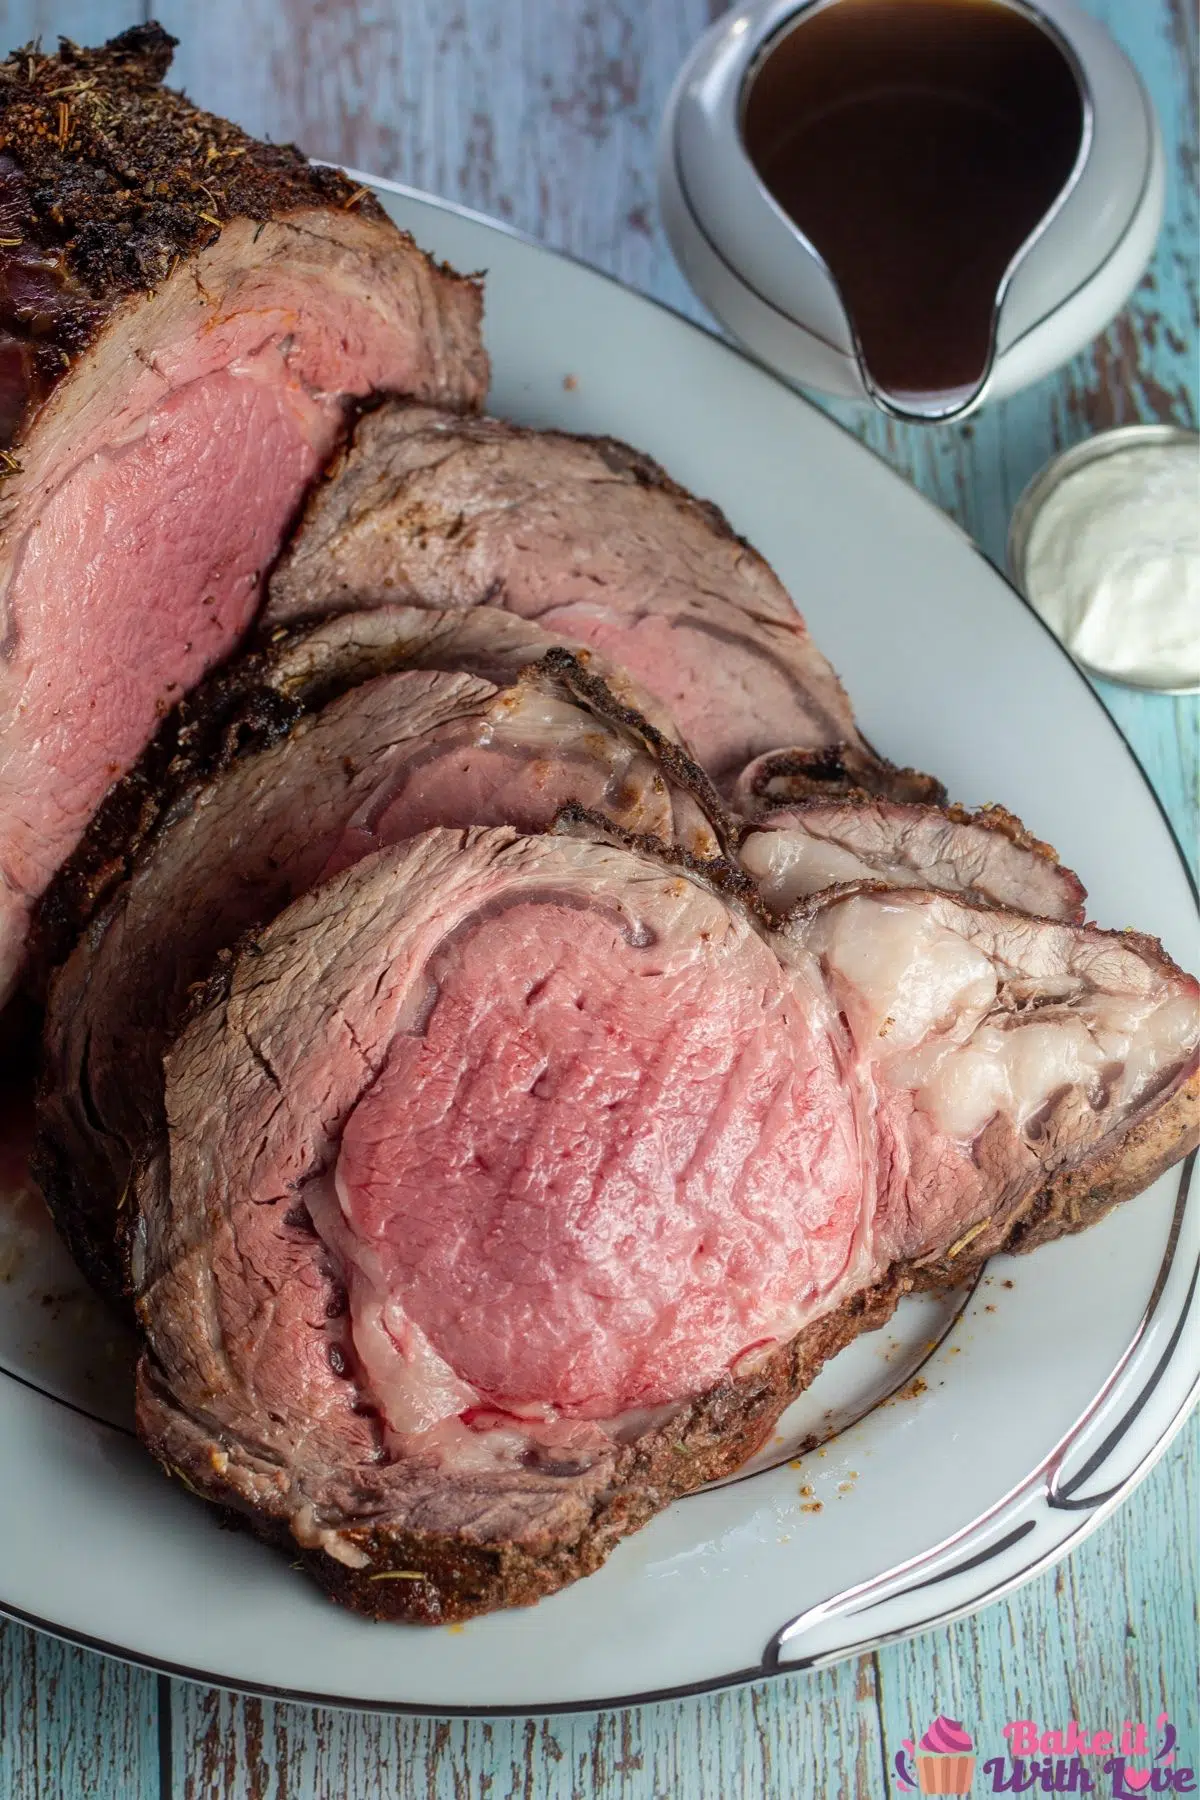 Tall overhead image of the sliced boneless prime rib roast with au jus and horseradish on the side.